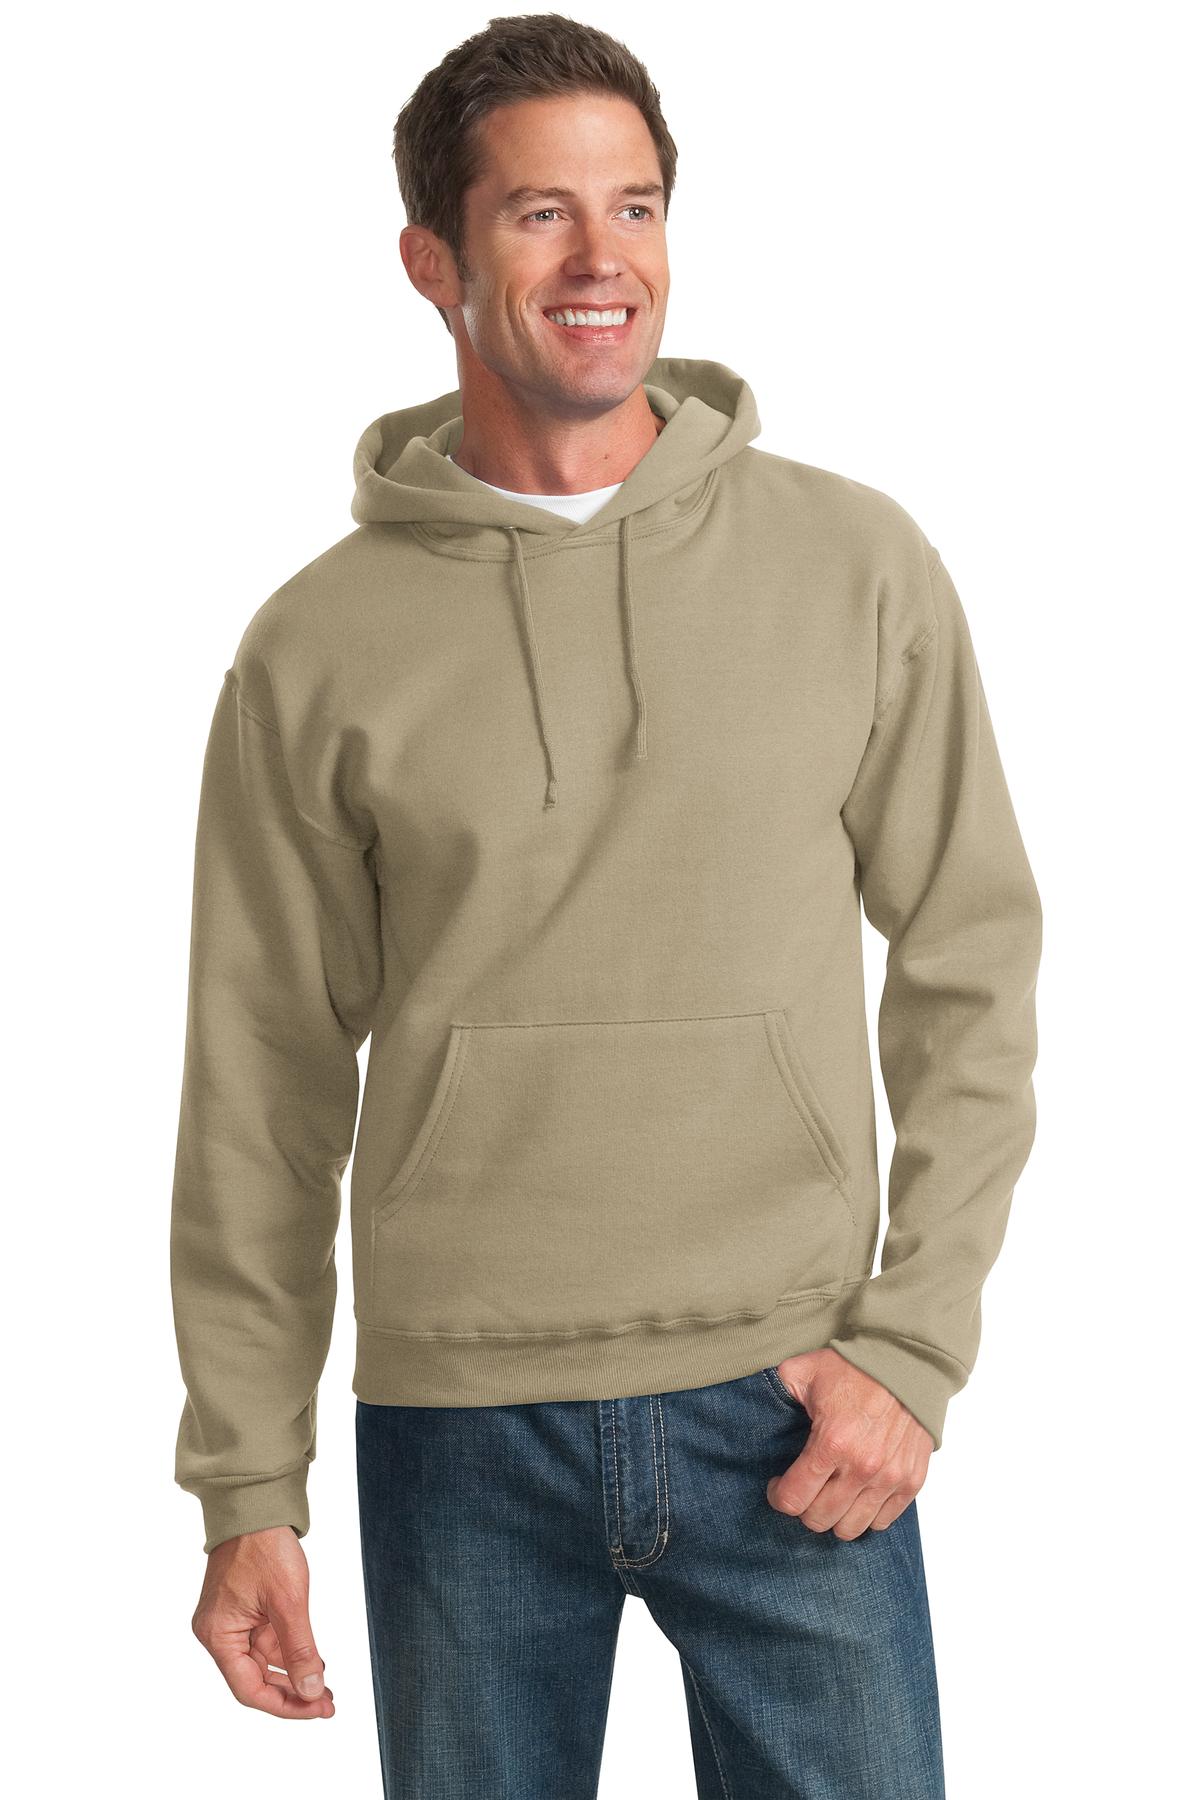 JERZEES® - NuBlend® Pullover Hooded Sweatshirt. 996M [Khaki] - DFW Impression